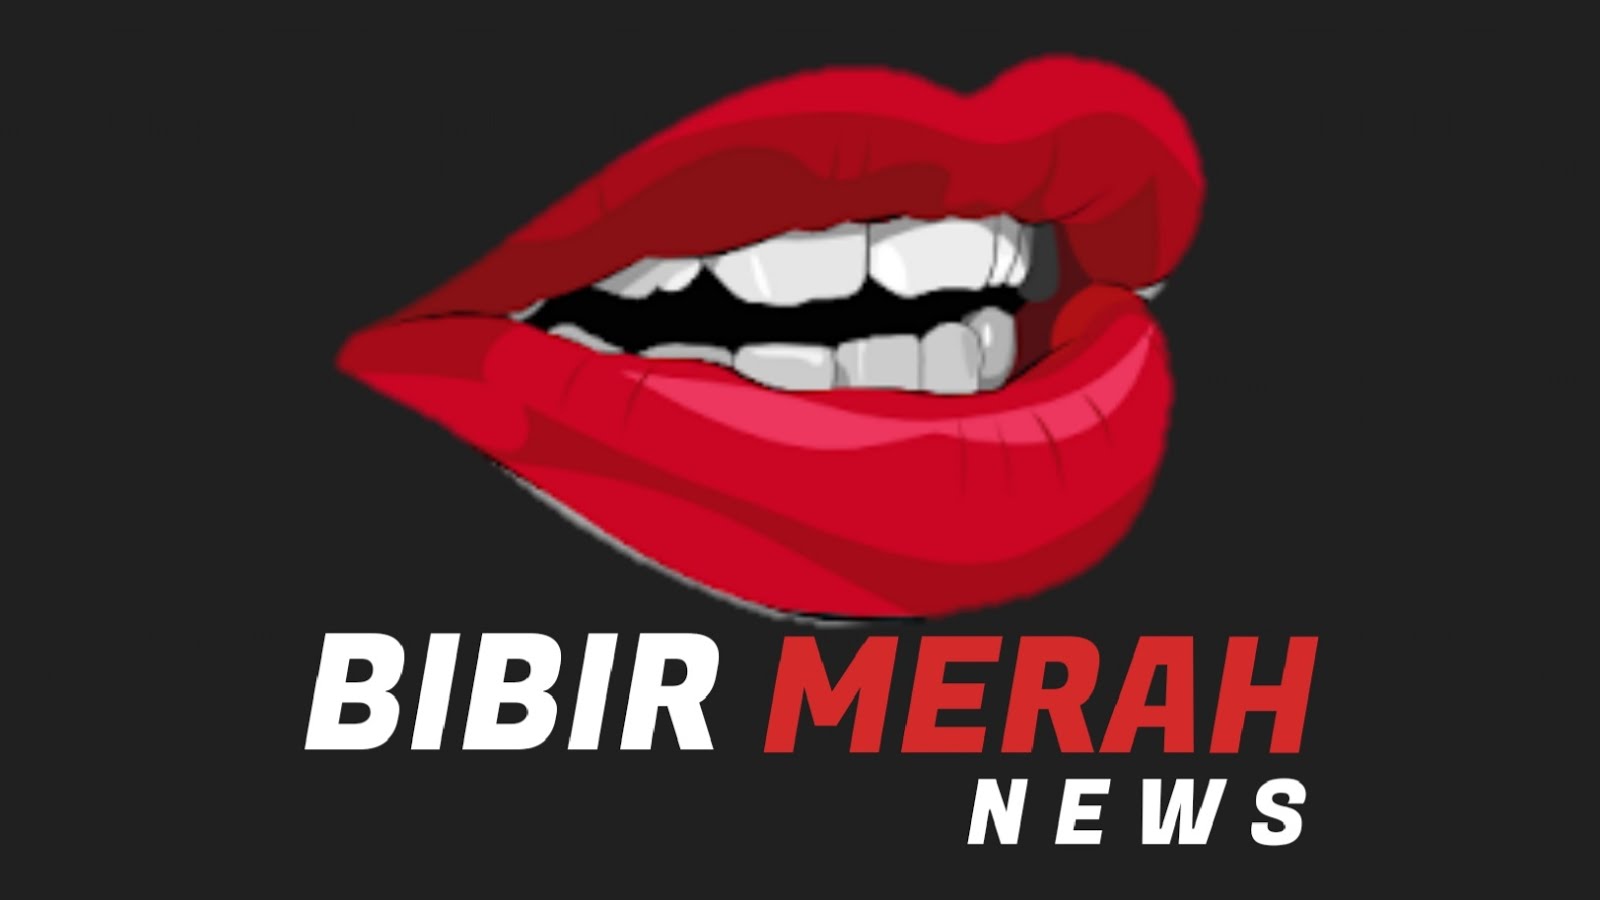 BIBIR MERAH NEWS